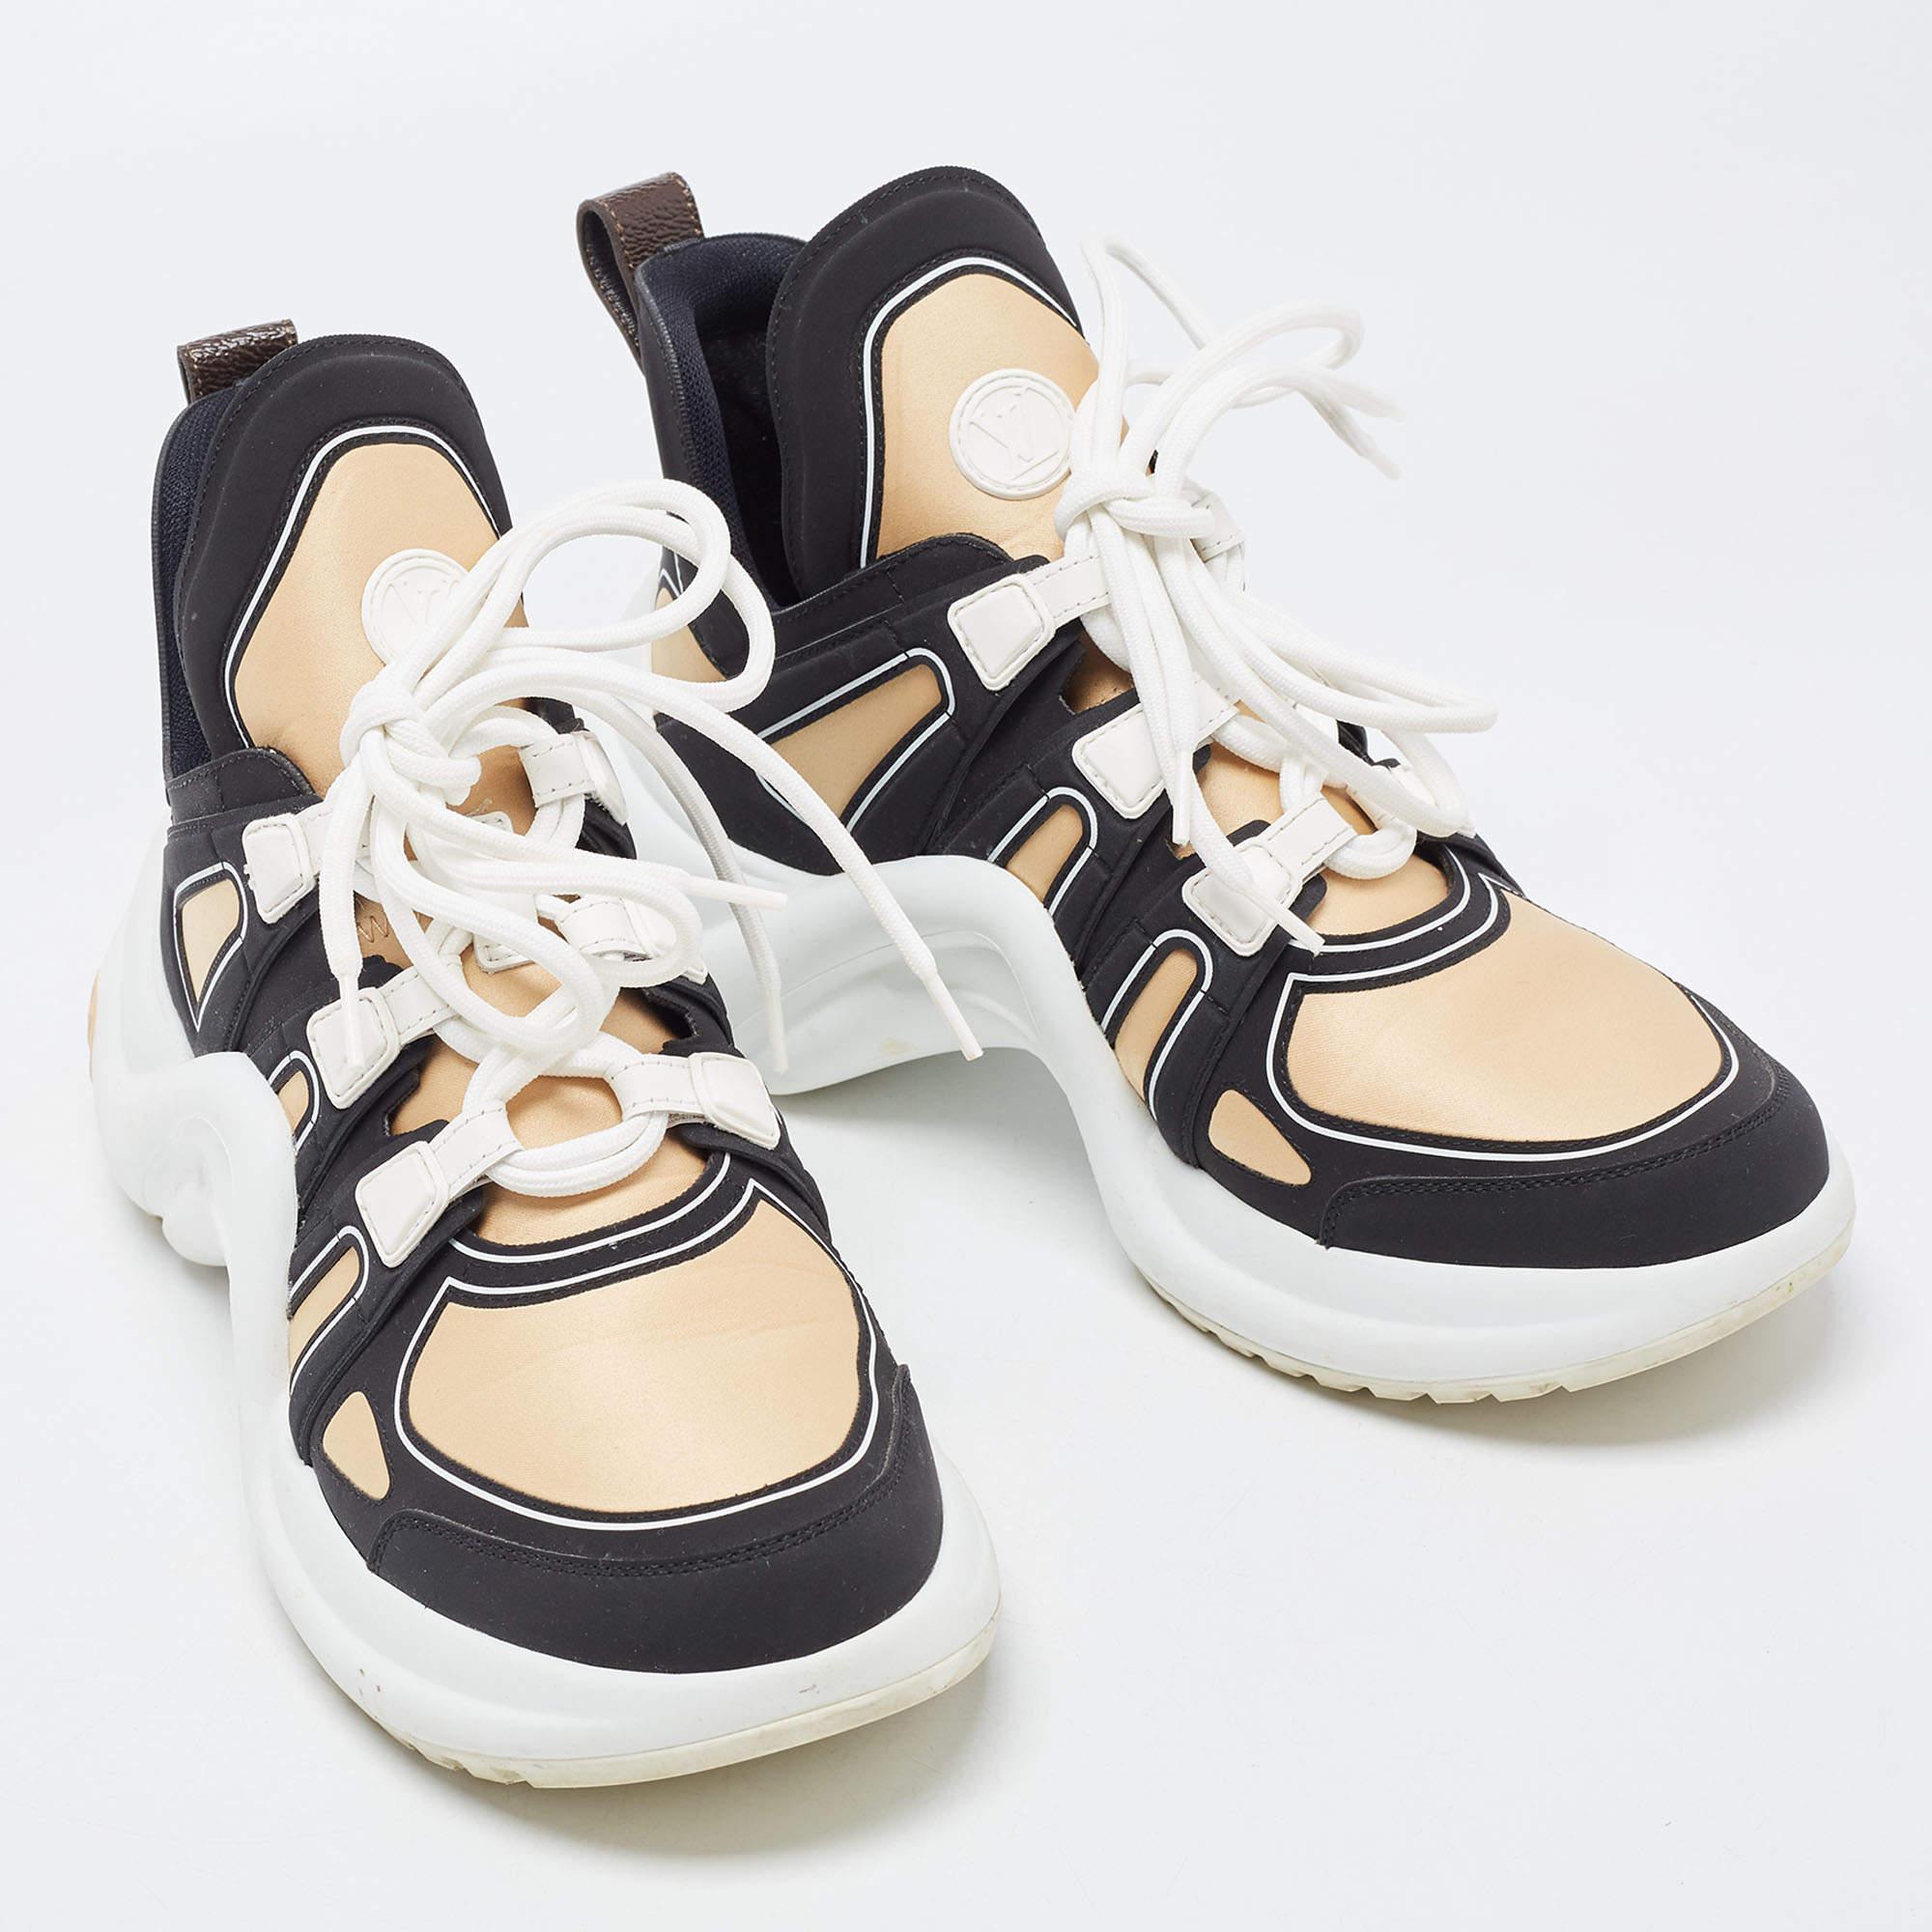 Louis Vuitton Brown/Black Nylon and Leather Archlight Sneakers Size 39 In Good Condition For Sale In Dubai, Al Qouz 2